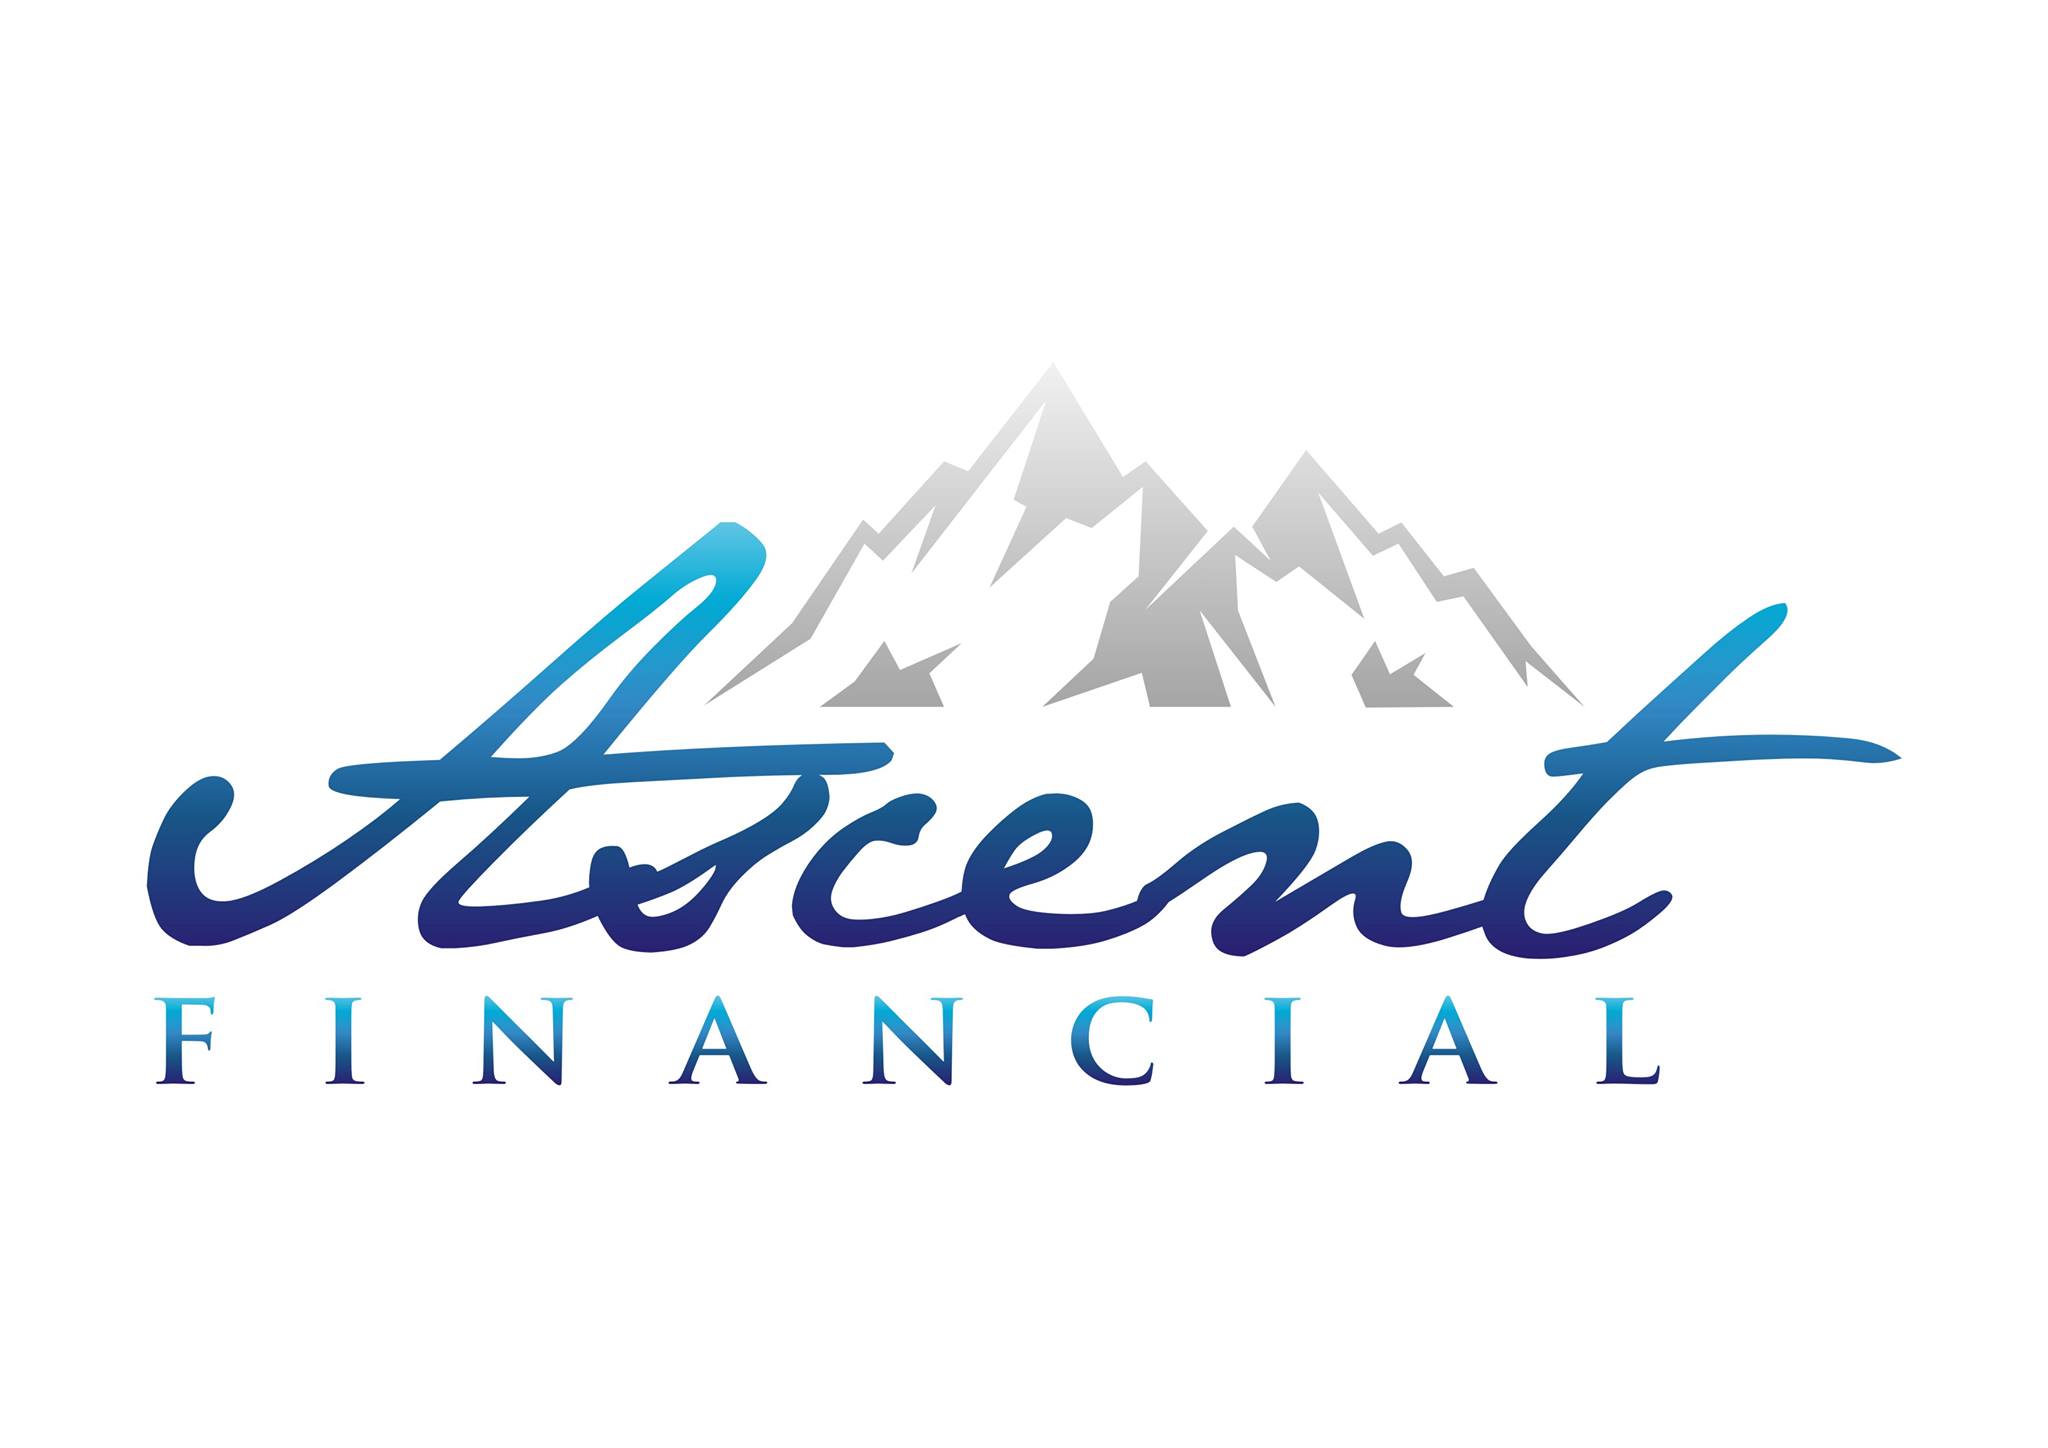 Ascent Financial